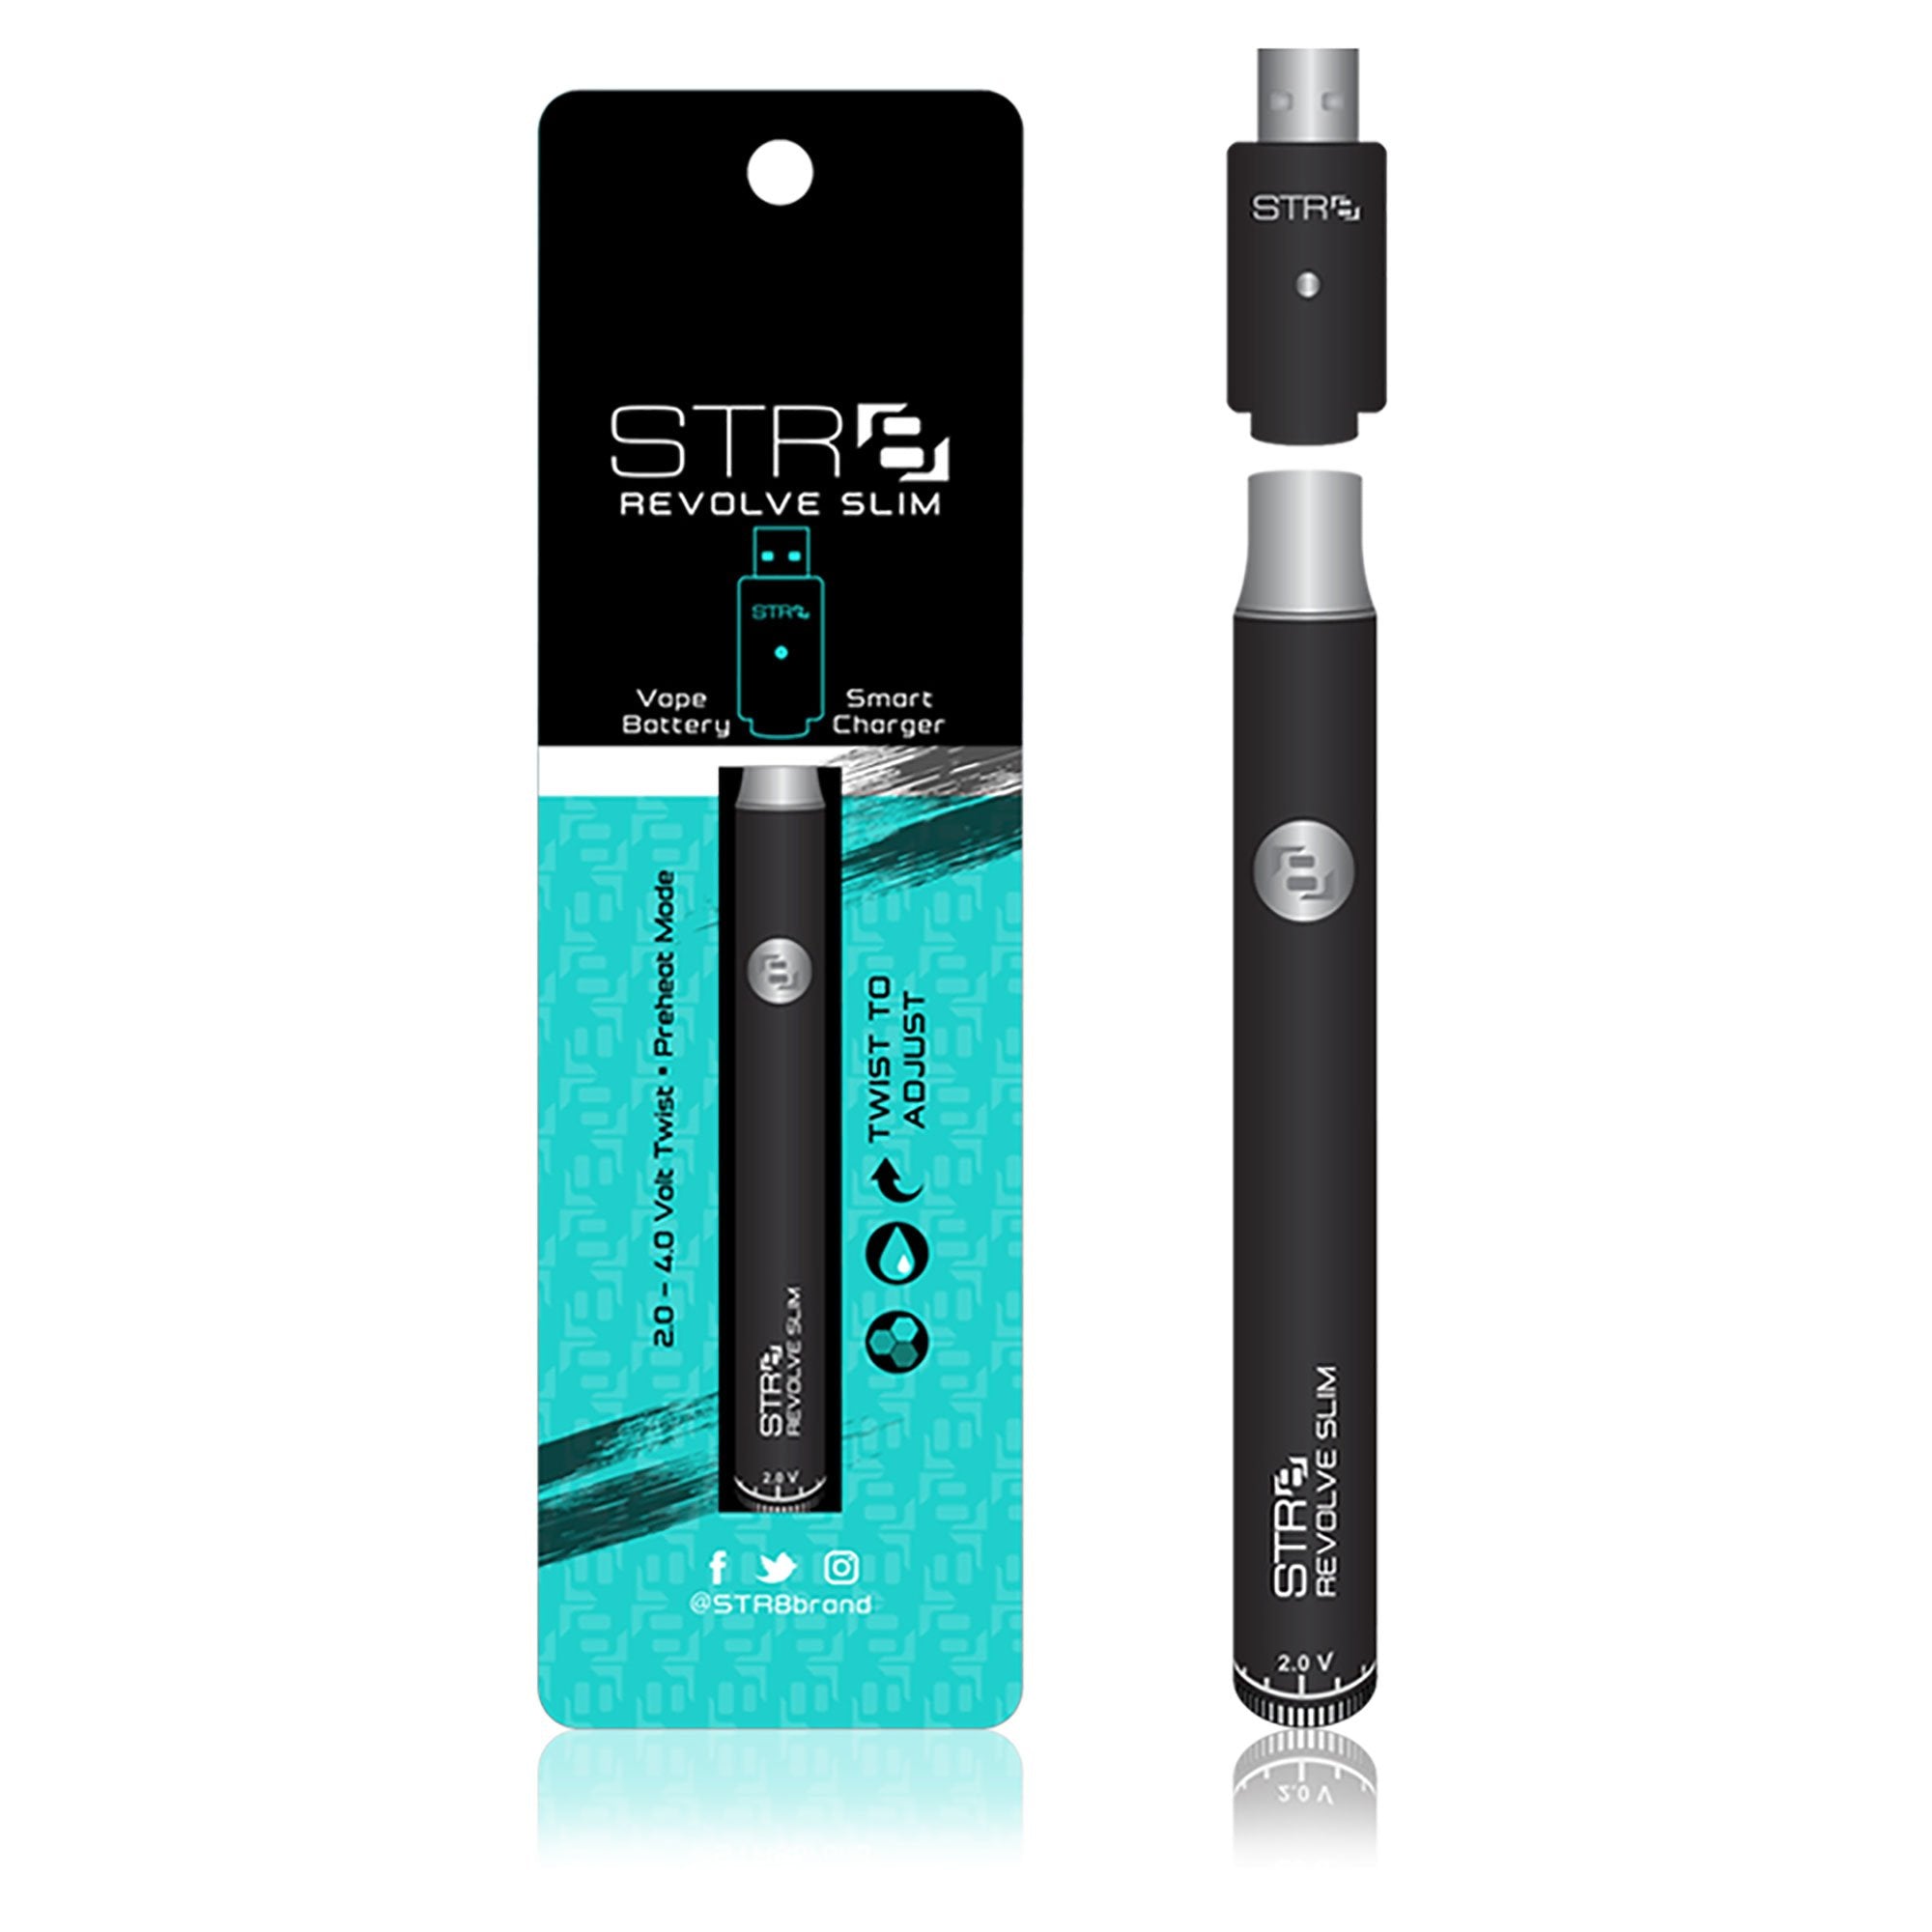 STR8 | Slim Revolve Battery w/ Charger | 320mAh - Black - 5 Count - 1